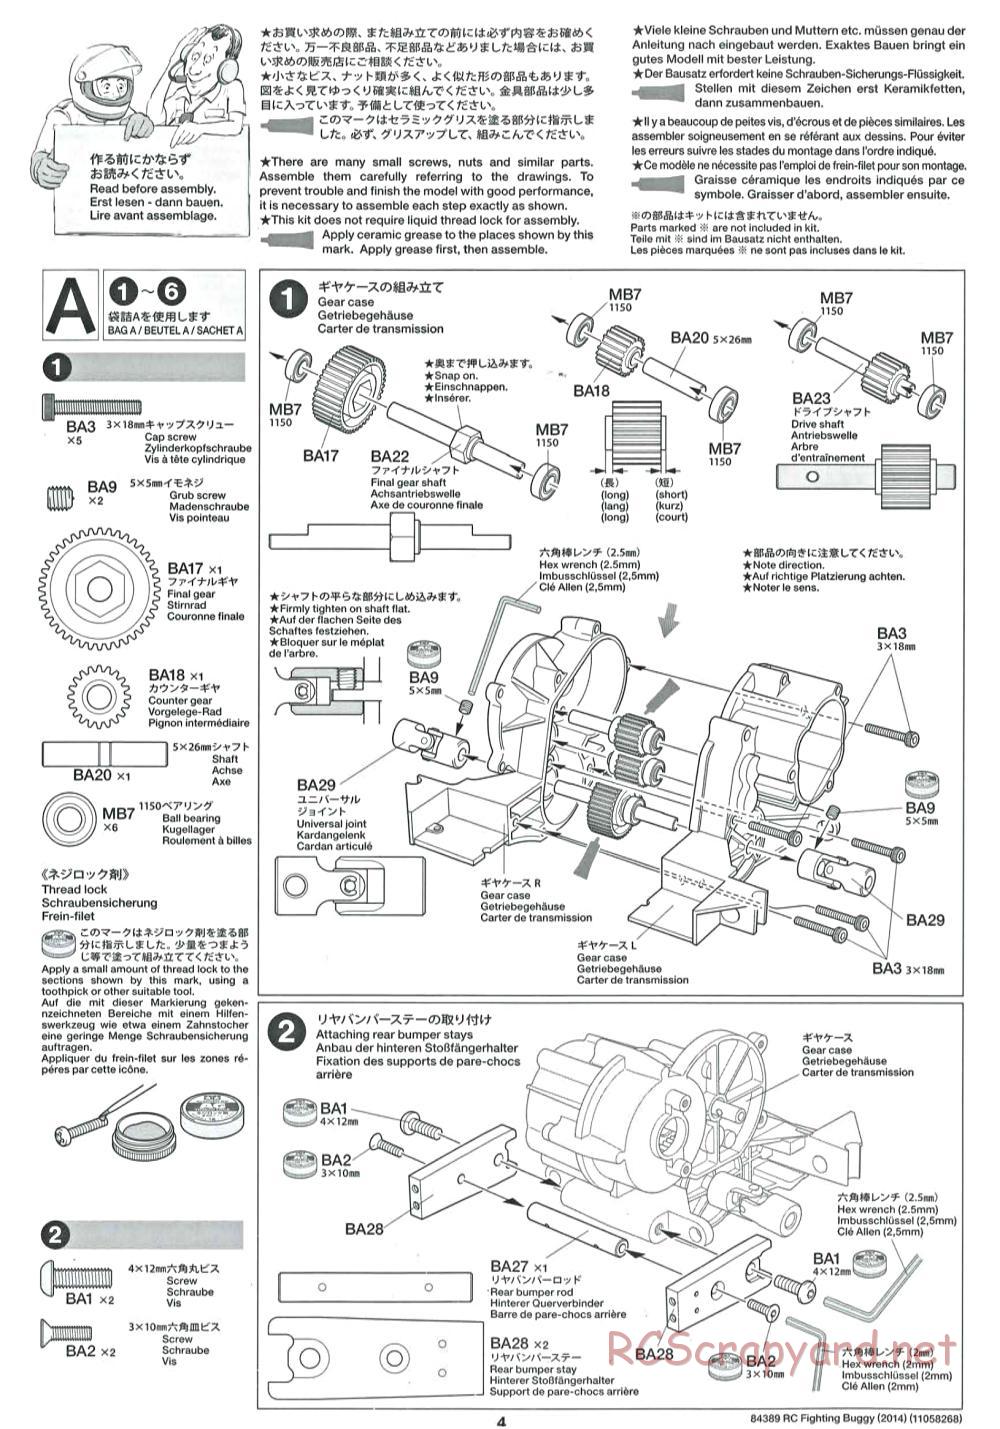 Tamiya - Fighting Buggy (2014) Chassis - Manual - Page 4